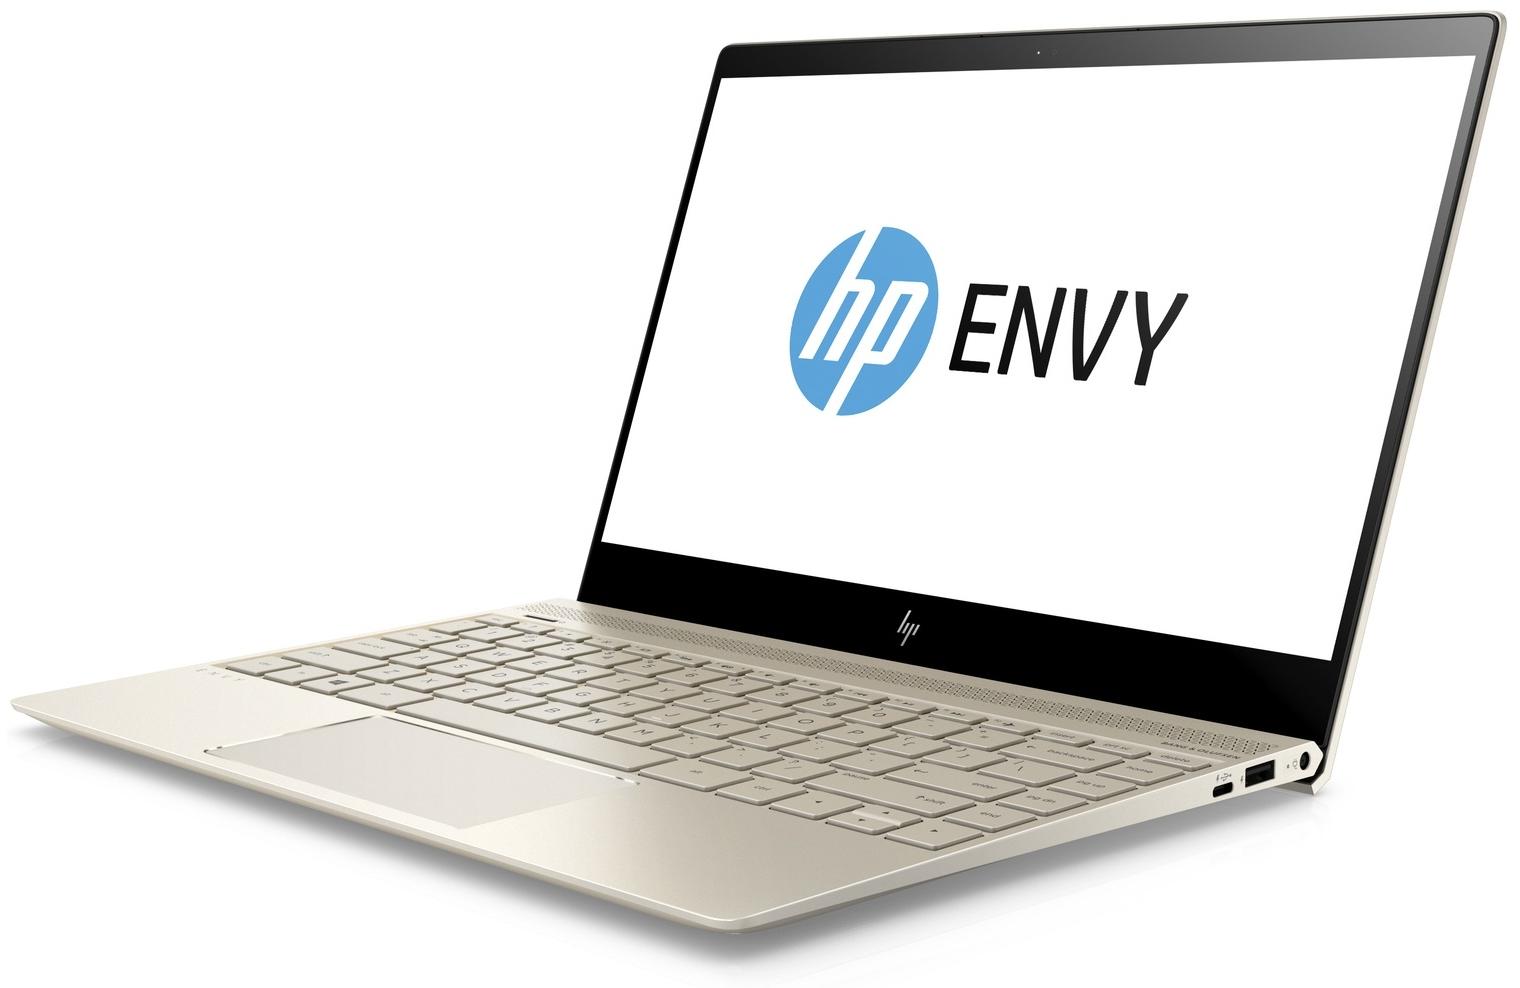  HP Envy 13-ah1012ur 5CV21EA  #1